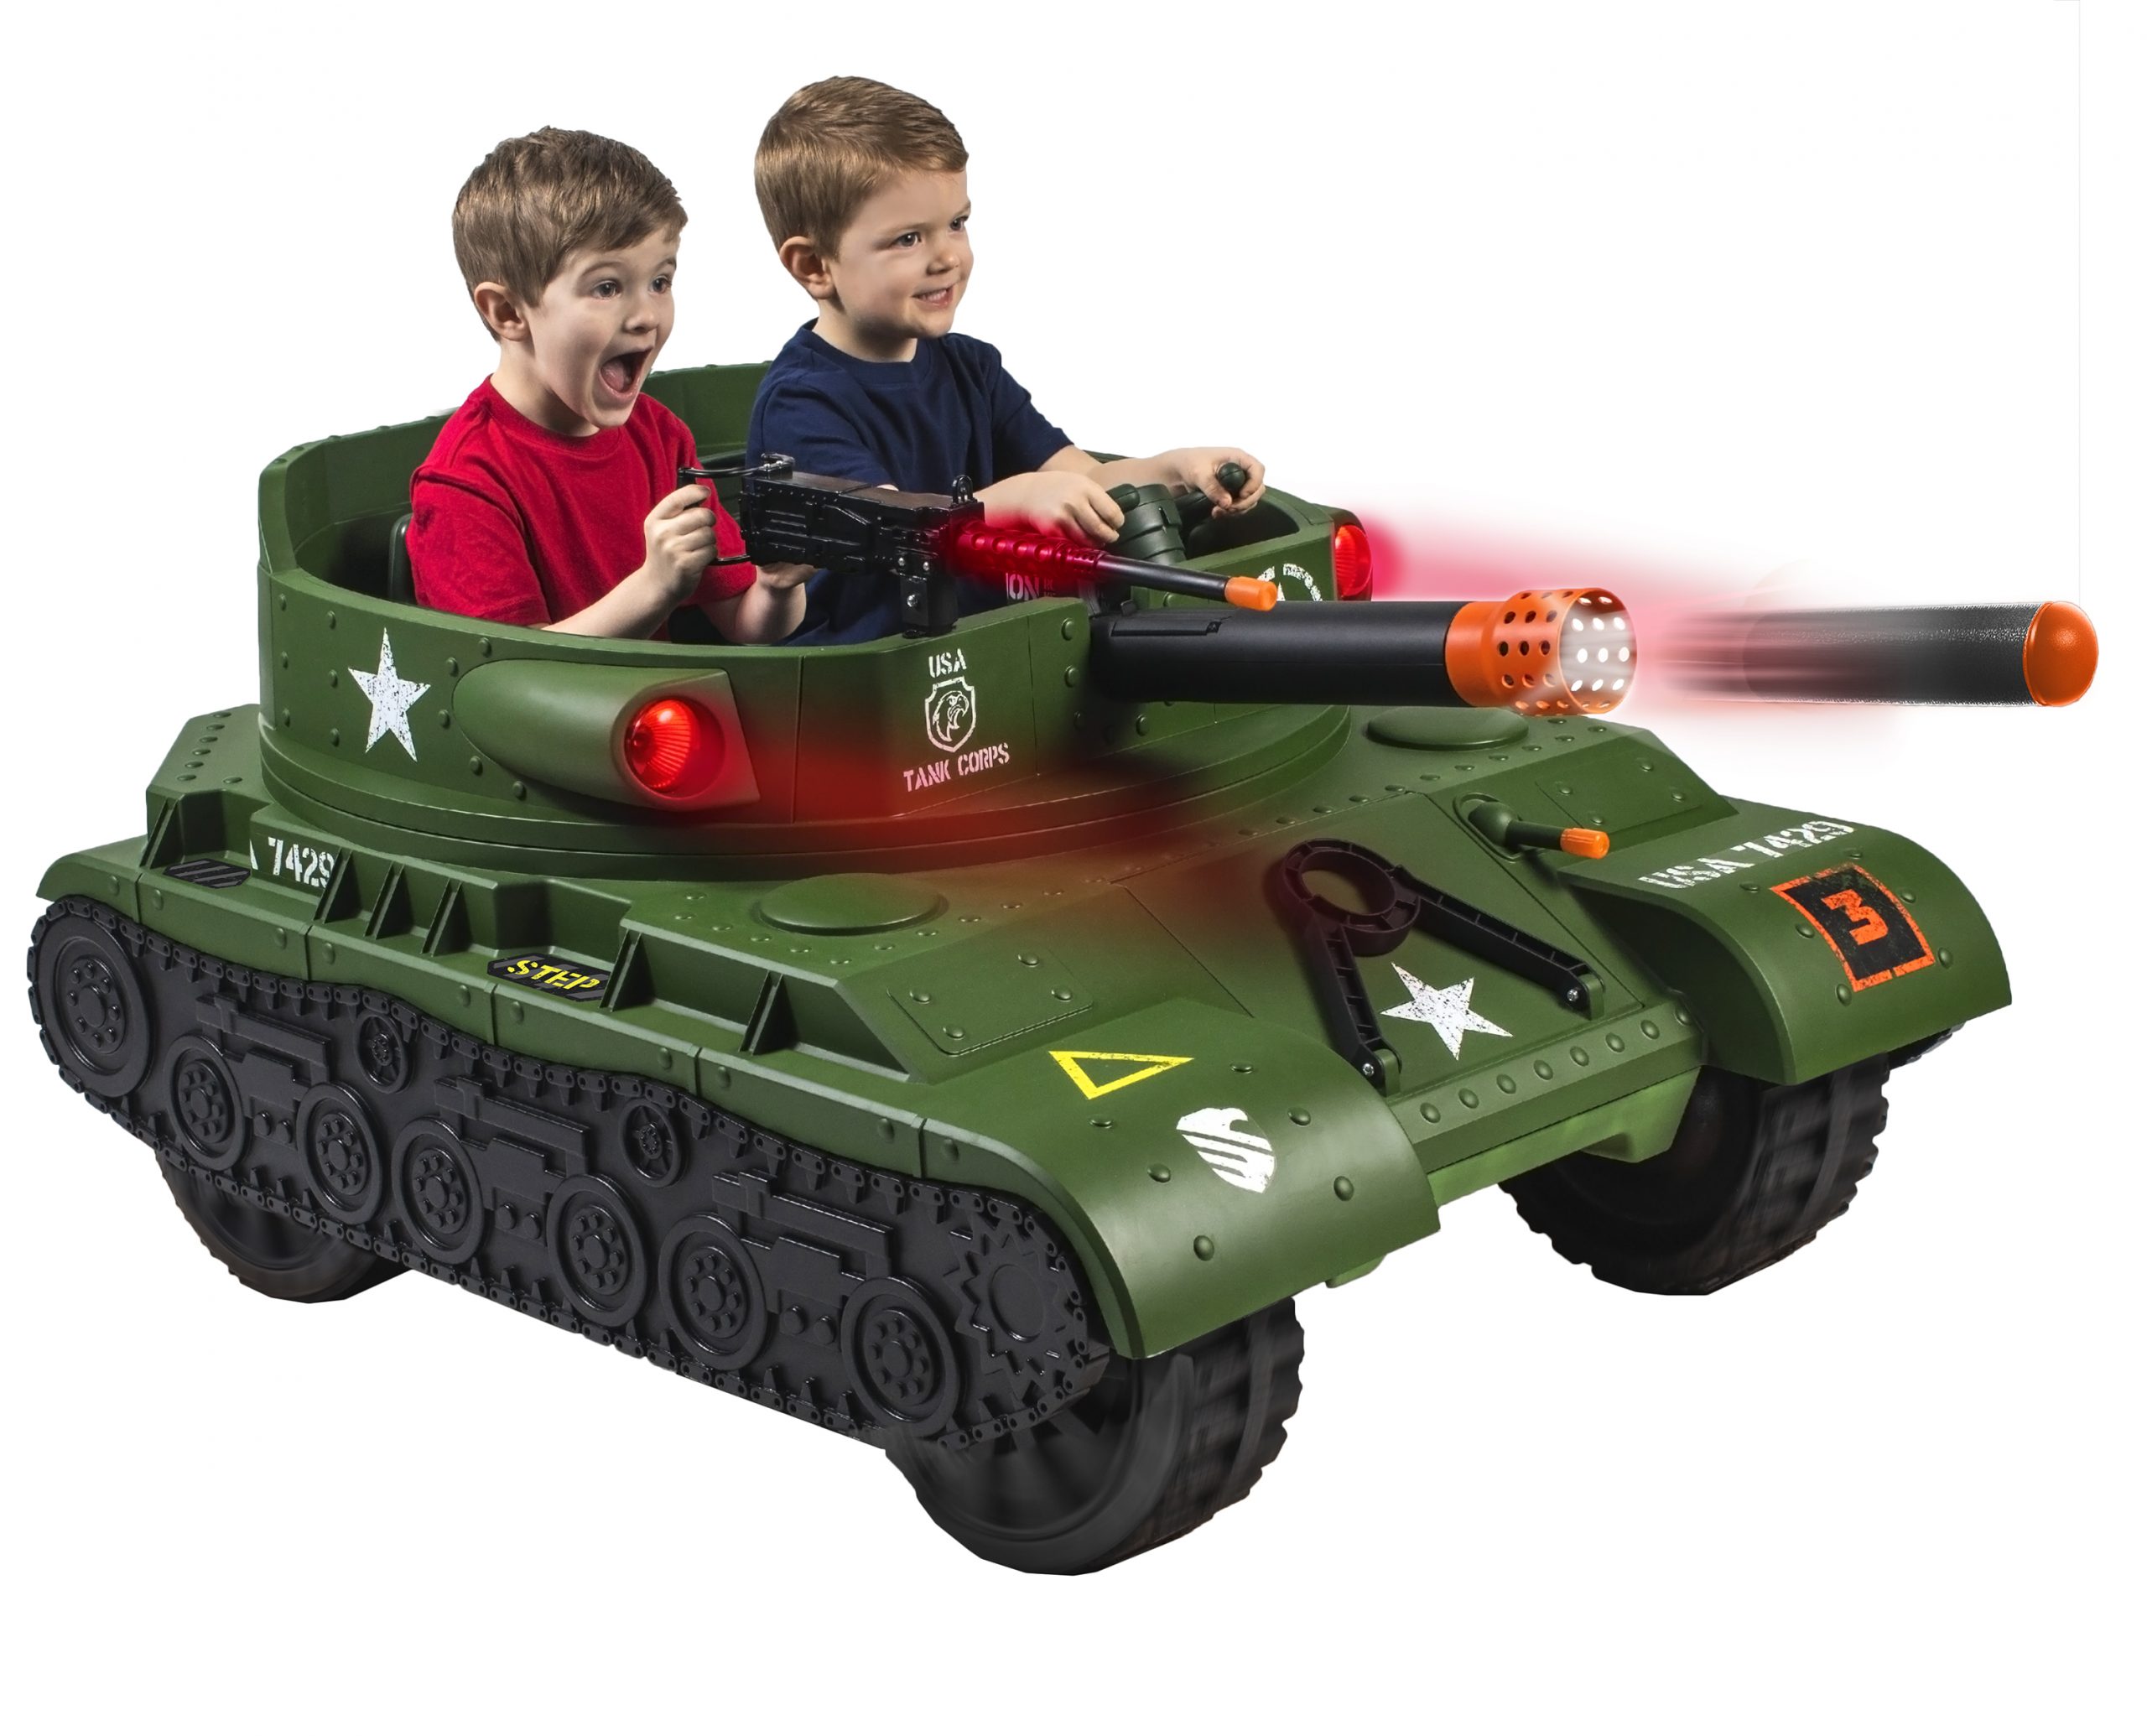 Thunder Tank Ride On 24 Volt Toy INSANE Walmart Clearance!